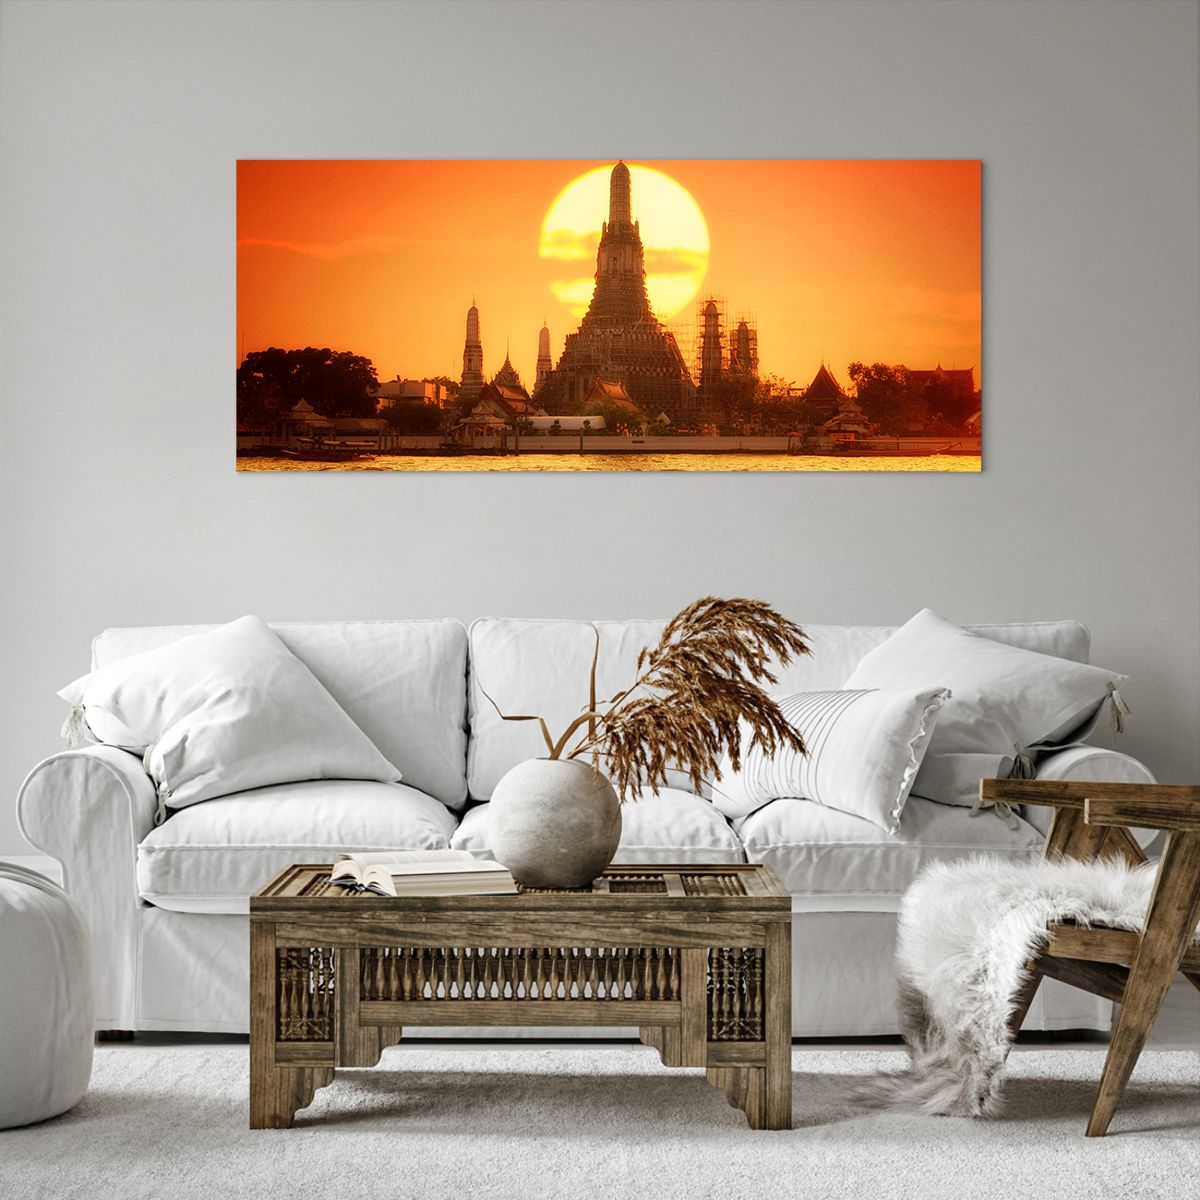 Impression sur toile Bangkok, Impression sur toile Temple De L'Aube, Impression sur toile Thaïlande, Impression sur toile Soleil, Impression sur toile Bouddhisme